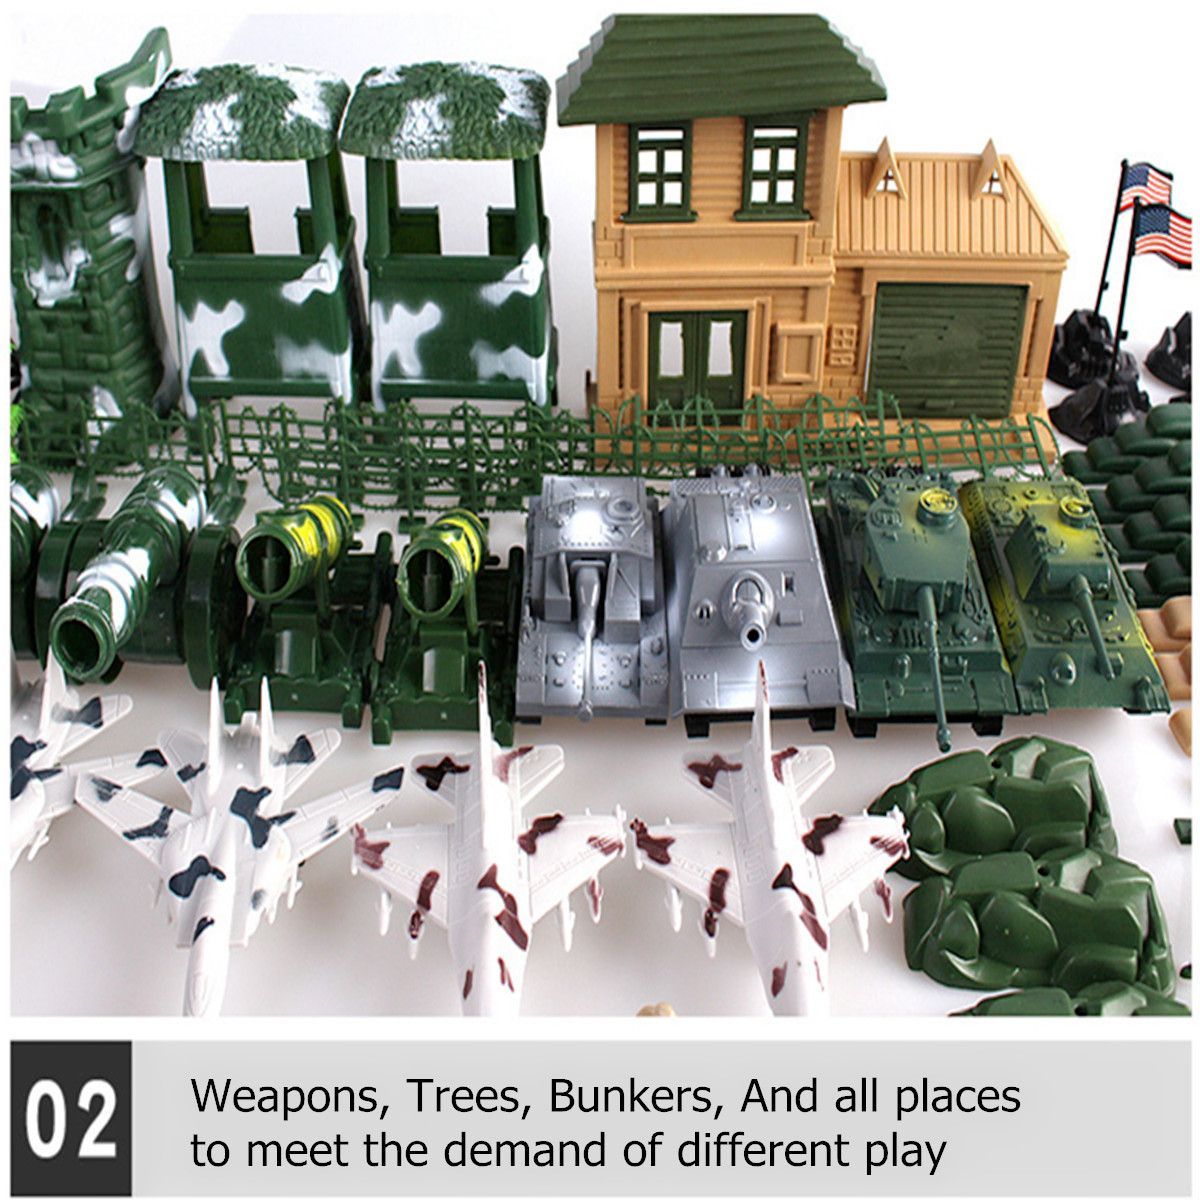 200pcs300pcs-Army-Soldier-Military-Model-DIY-War-Scene-Kids-Toys-1472979